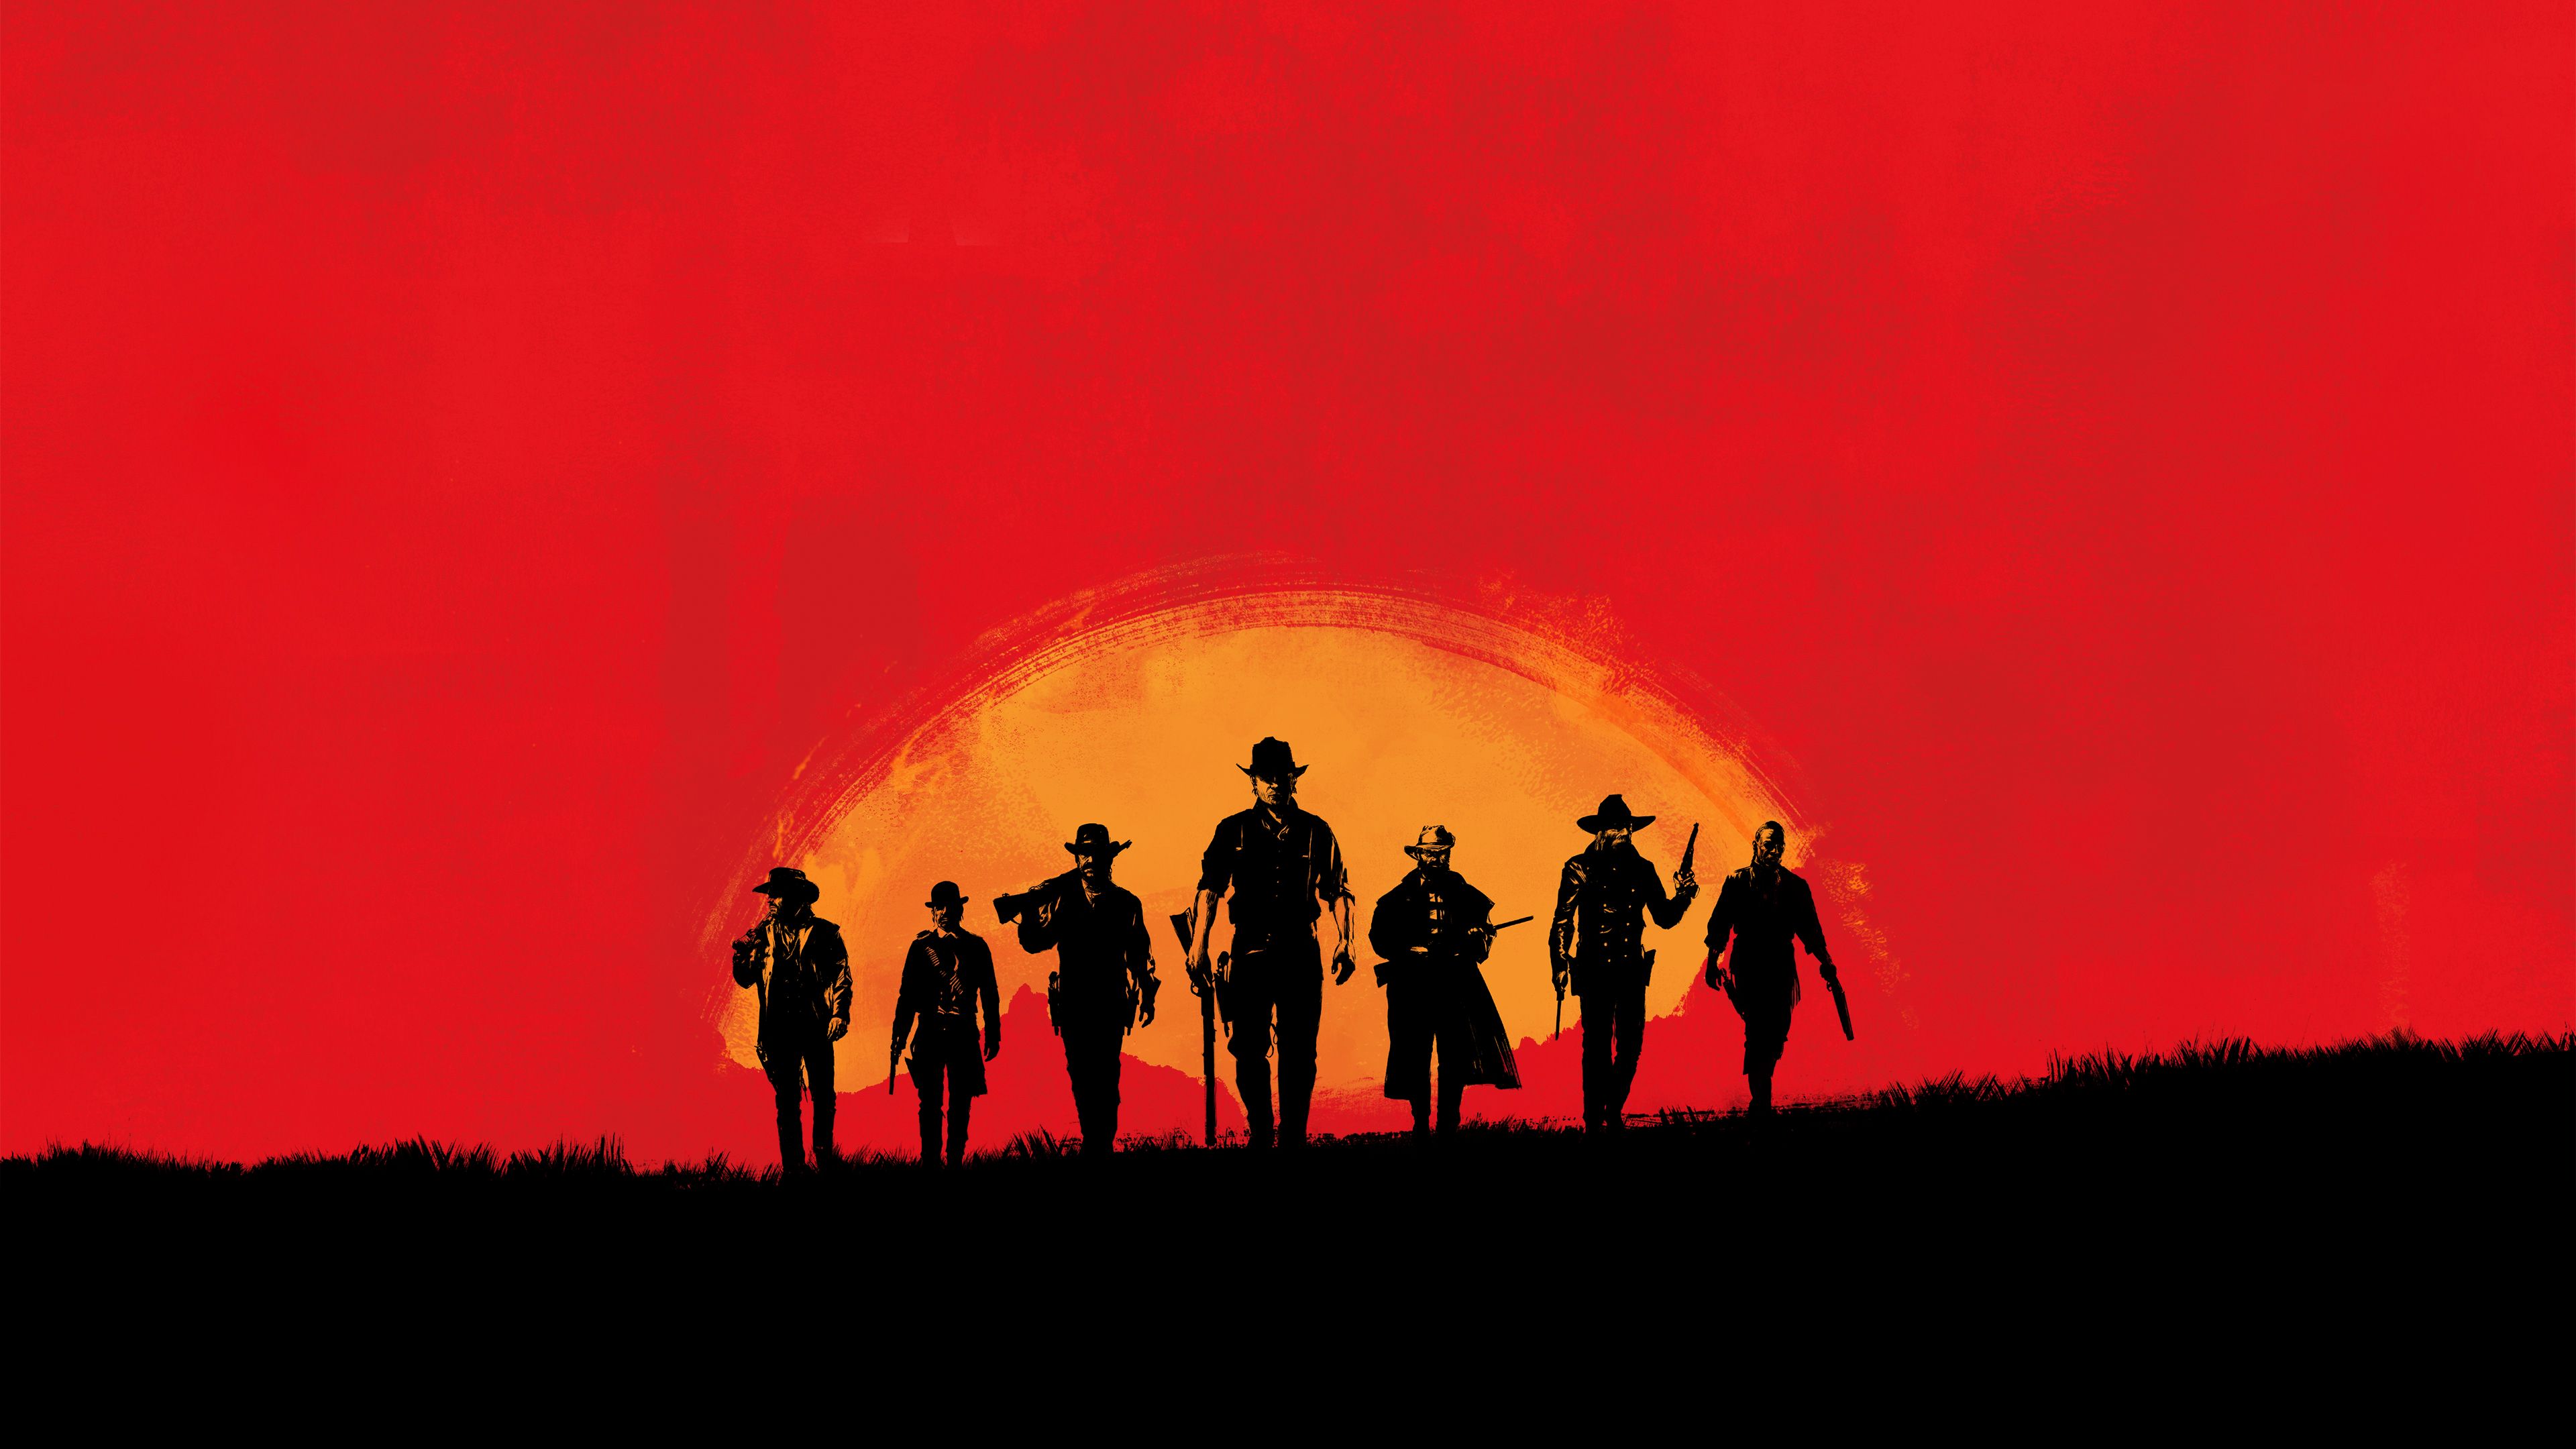 Linux Red Dead Redemption 2 Wallpaper